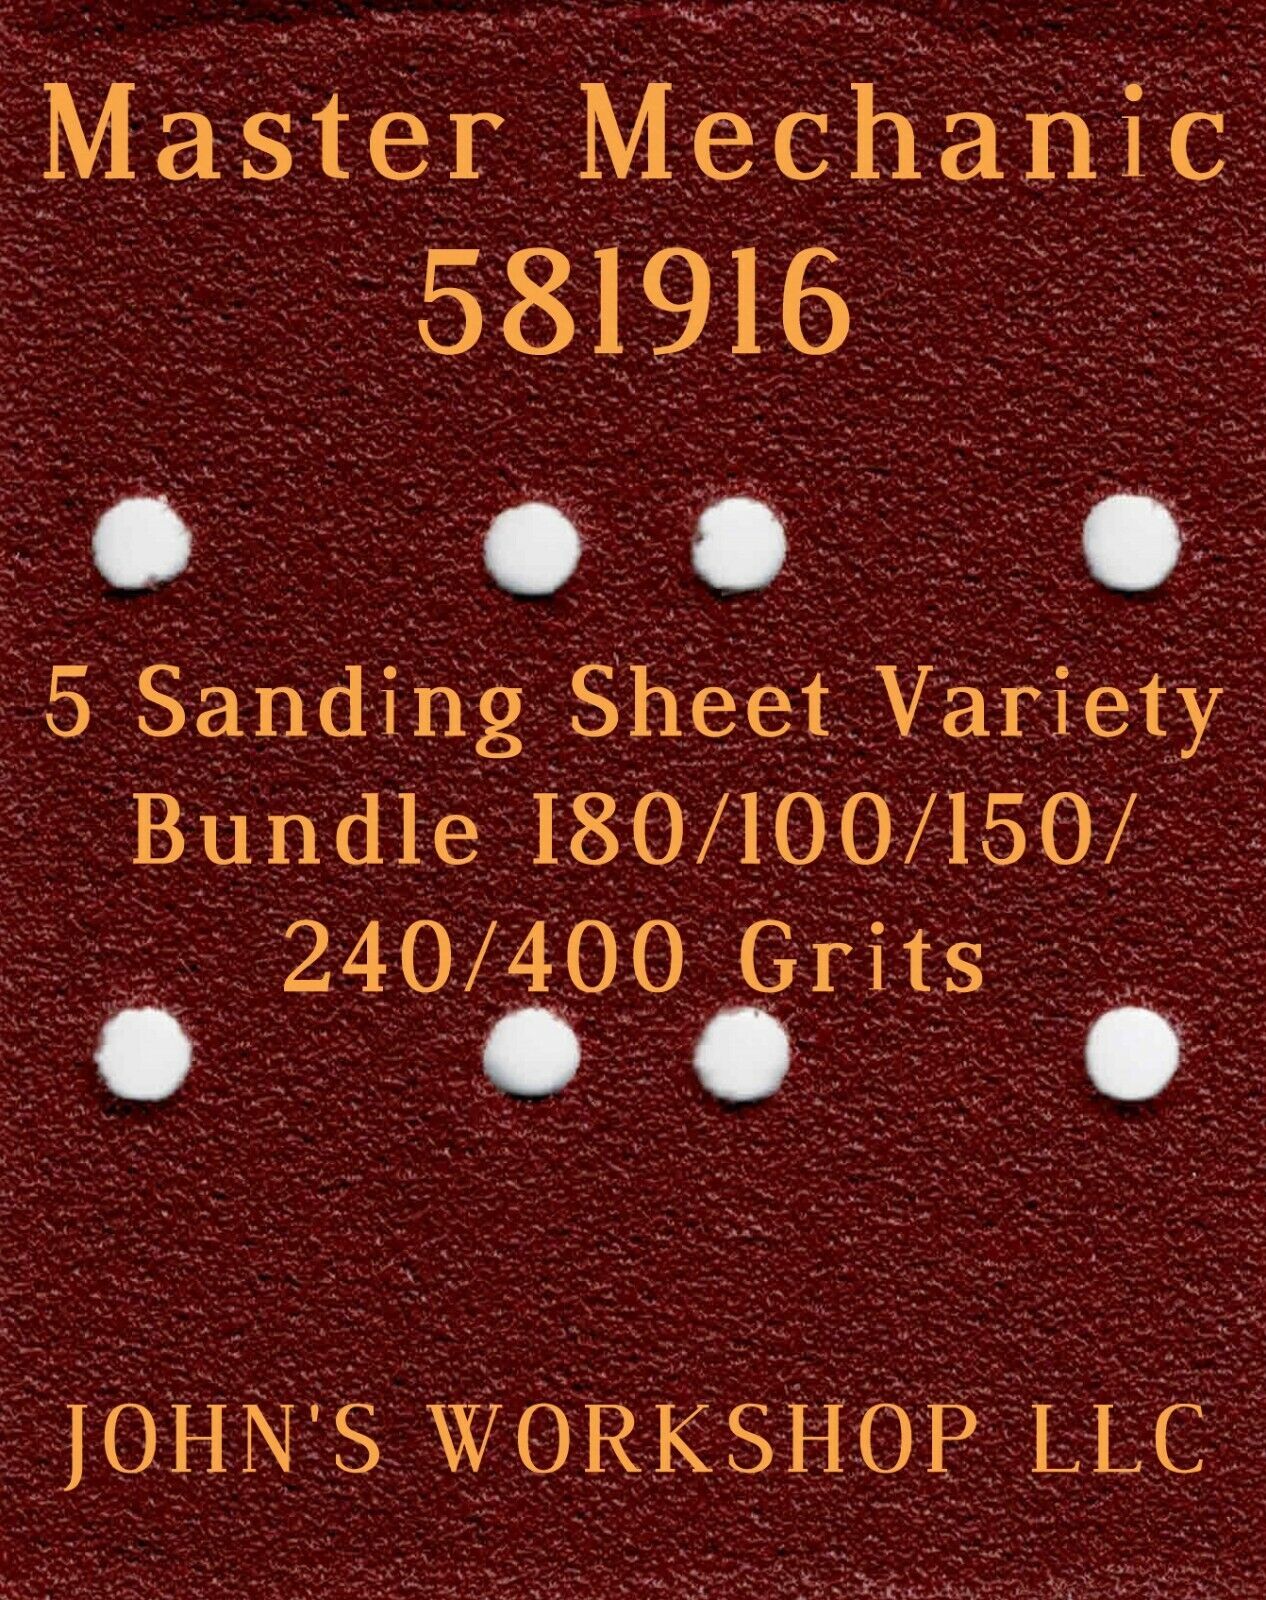 Primary image for Master Mechanic 581916 - 80/100/150/240/400 Grits - 5 Sandpaper Variety Bundle I